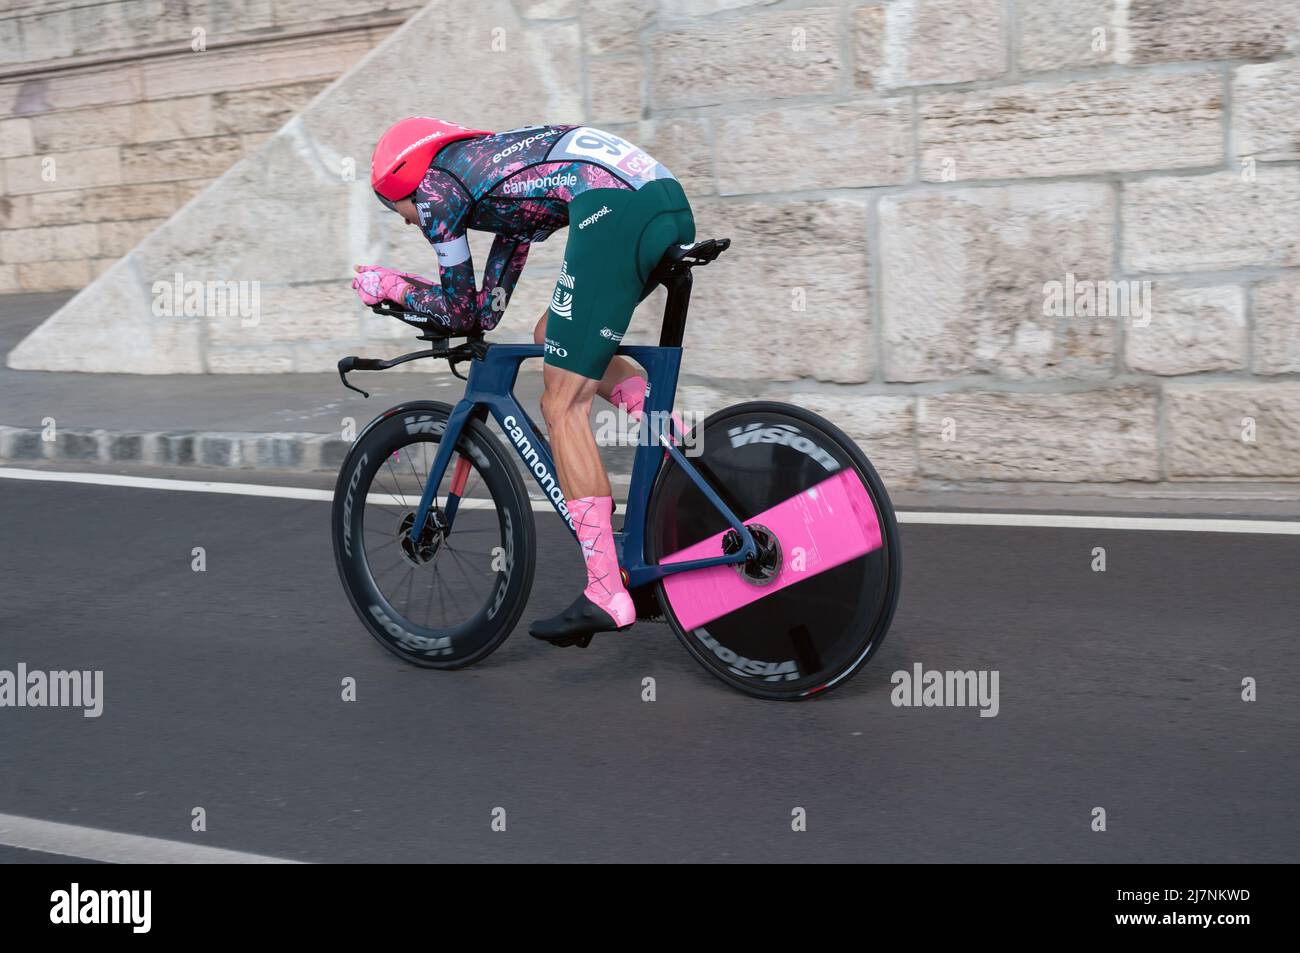 BUDAPEST, UNGARN - 07. MAI 2022: Profi-Radfahrer Simon Carr EF EDUCATION - EASYPOST Giro D'Italia Etappe 2 Zeitfahren - Radrennen am 07. Mai 202 Stockfoto